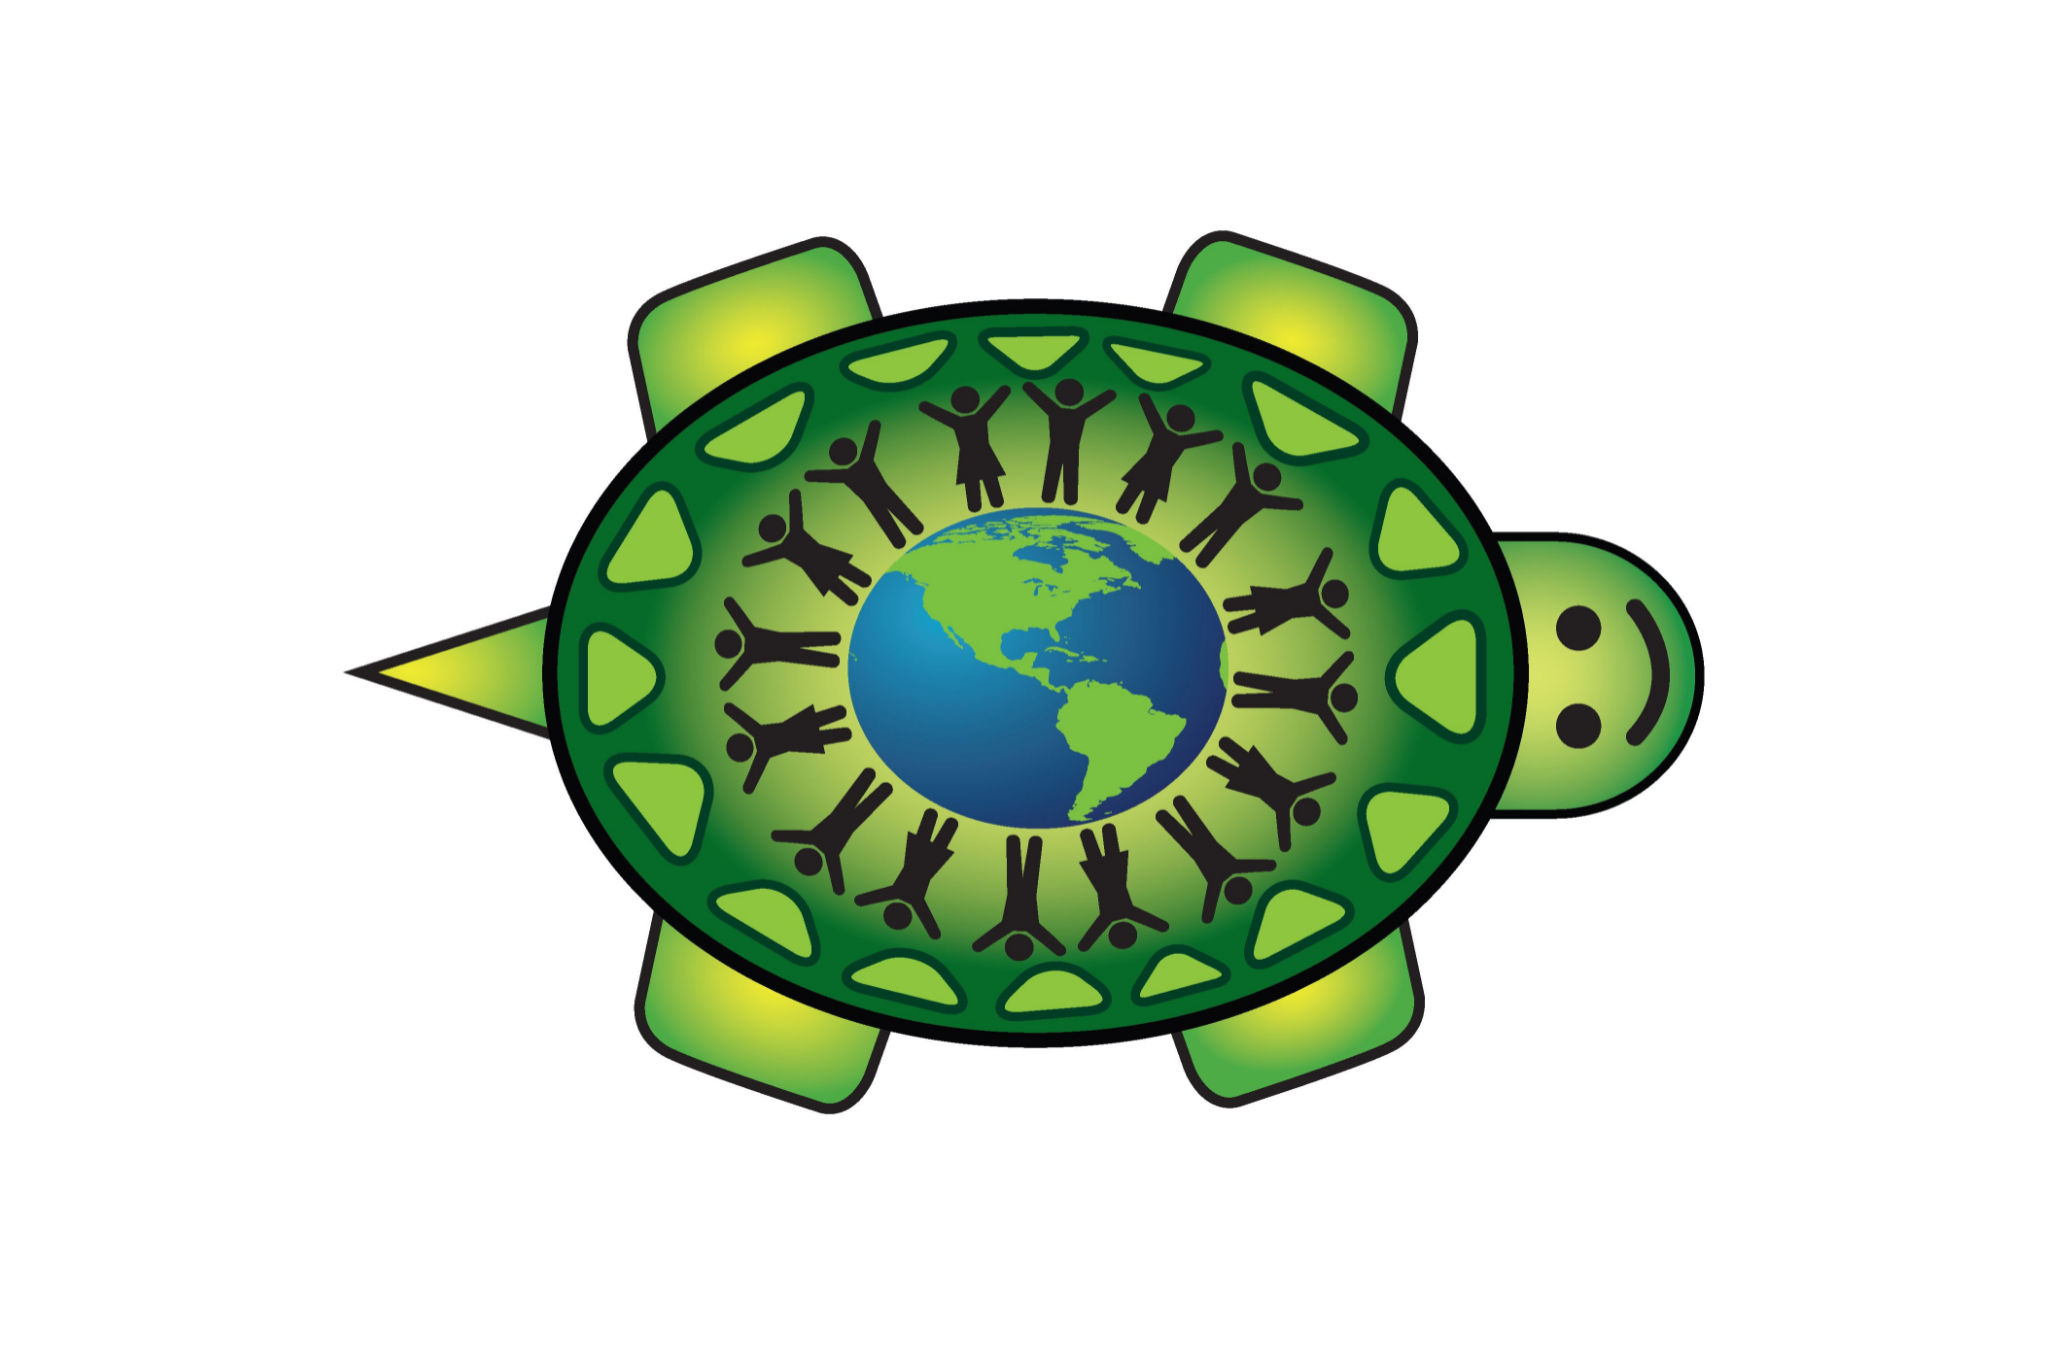 green turtle logo